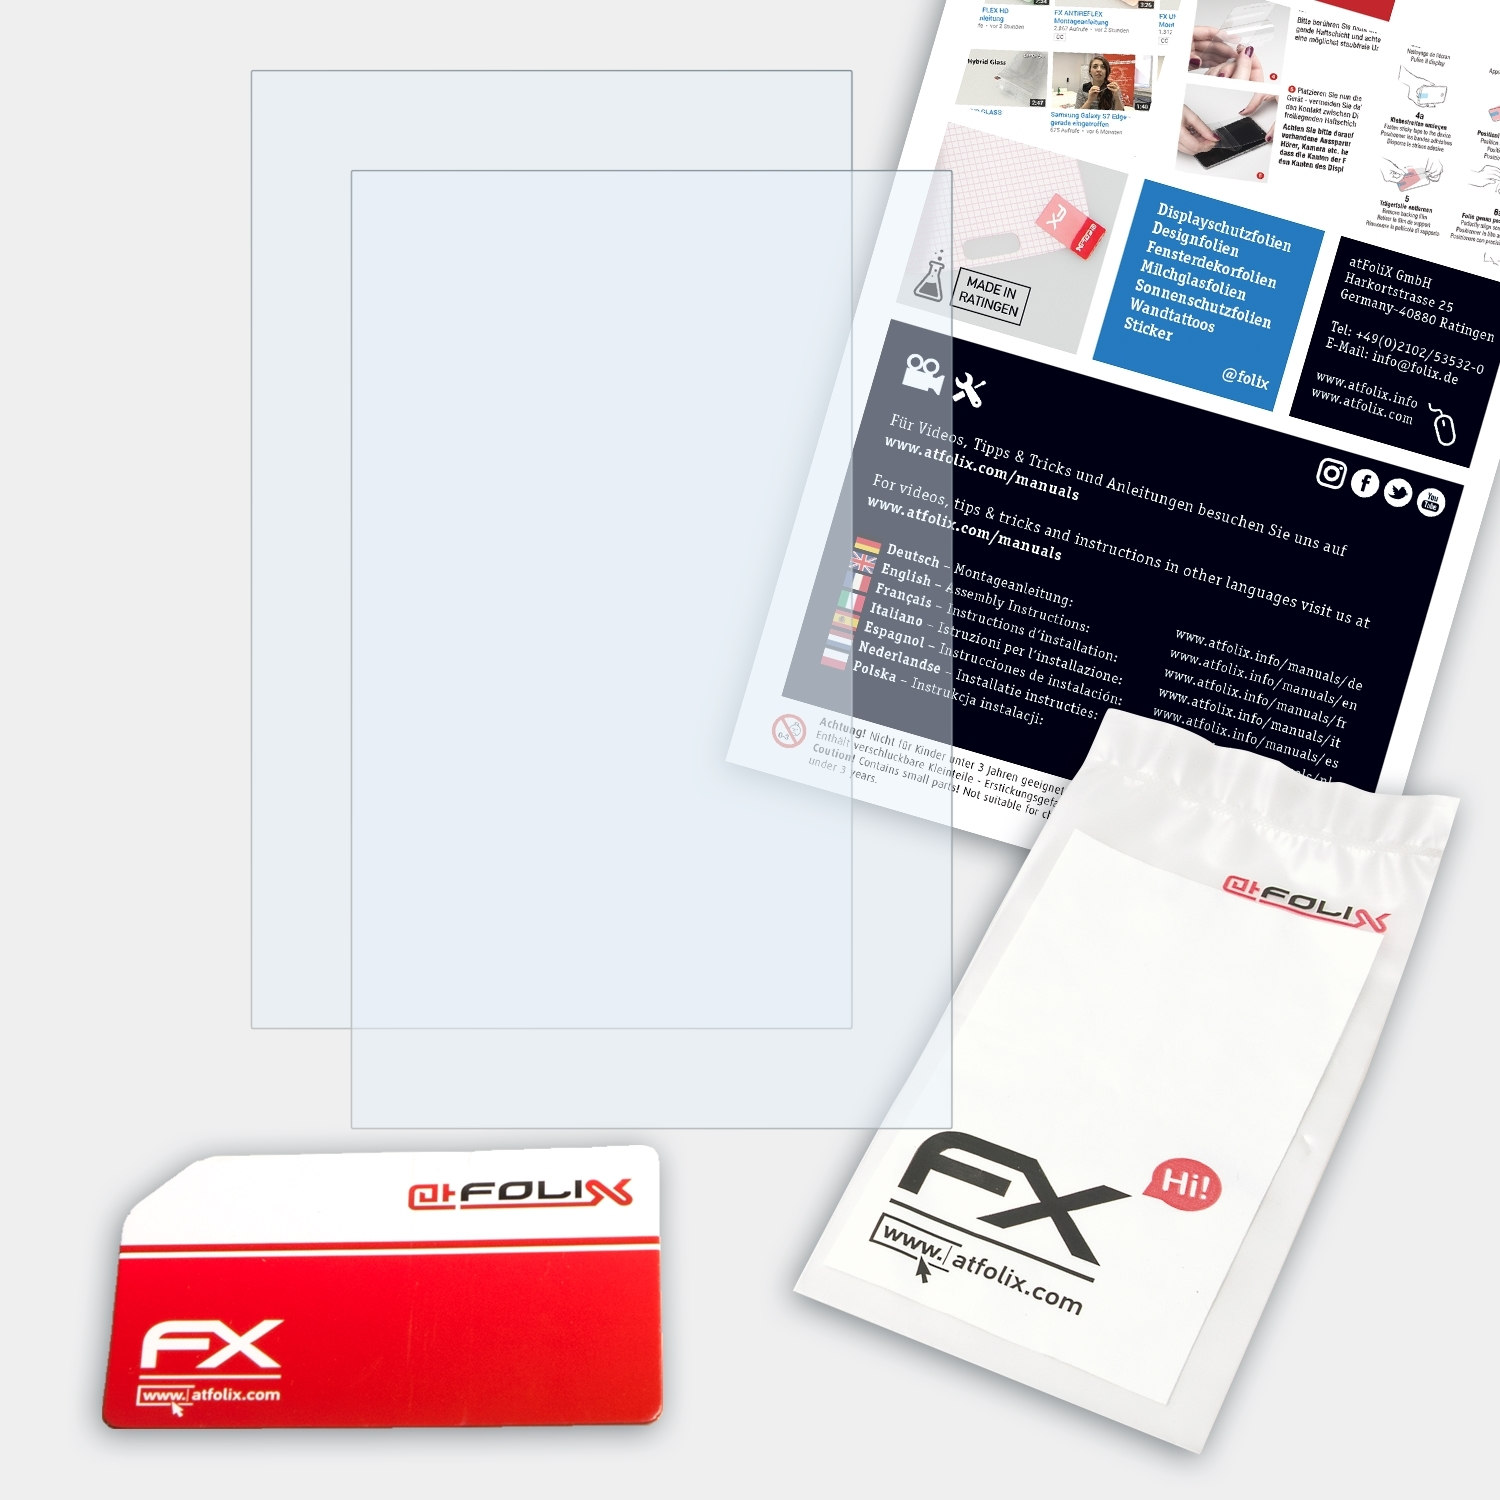 ATFOLIX 2x FX-Clear Displayschutz(für Fujitsu Stylistic ST6012)